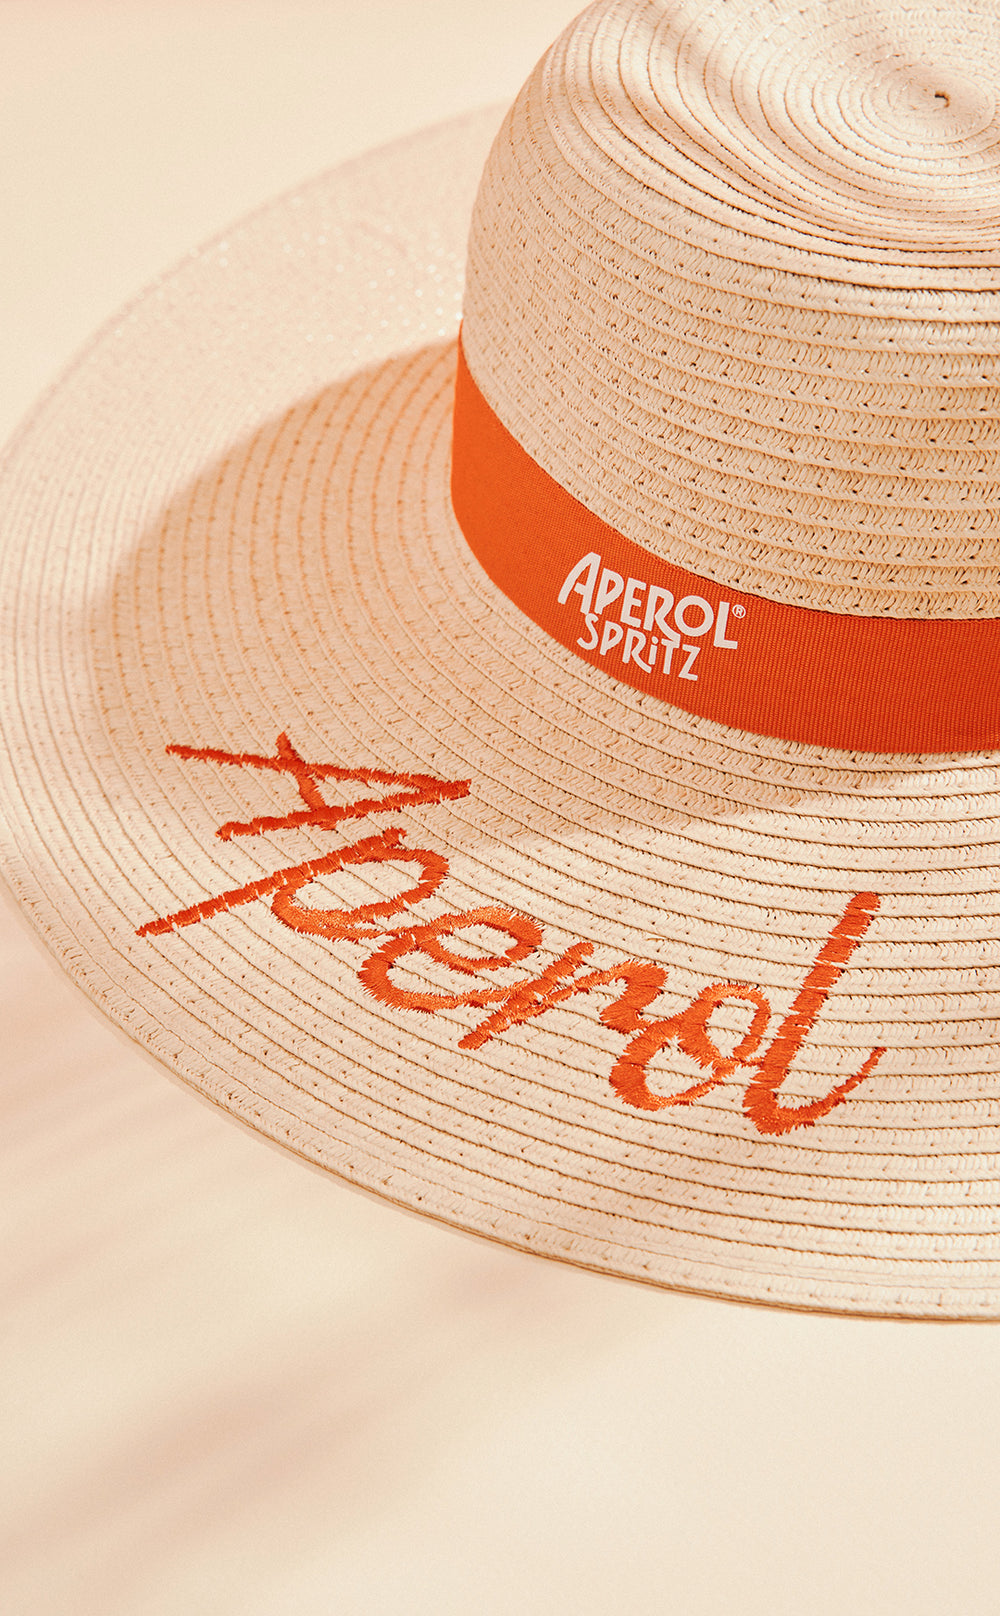 Aperol Wide Brimmed Hat